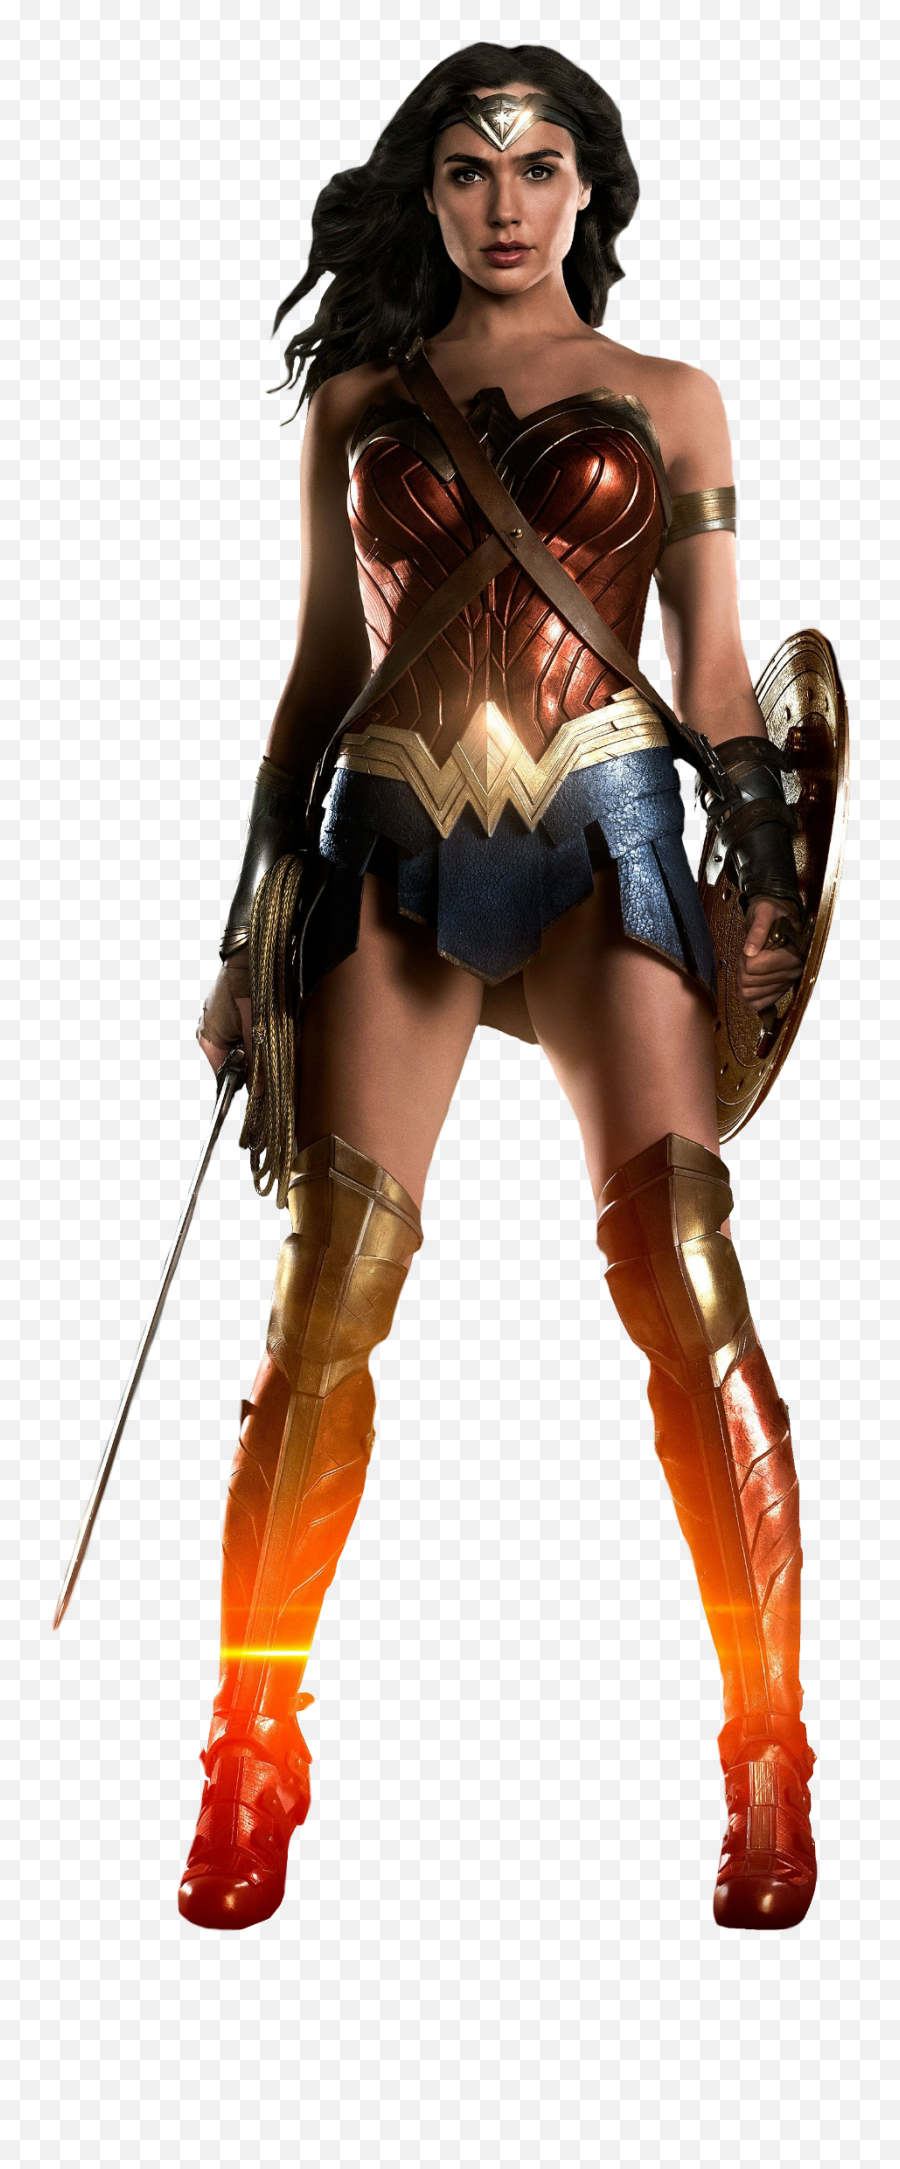 Download Free Png Wonder Woman - Wonder Woman Transparent,Wonder Woman Transparent Background